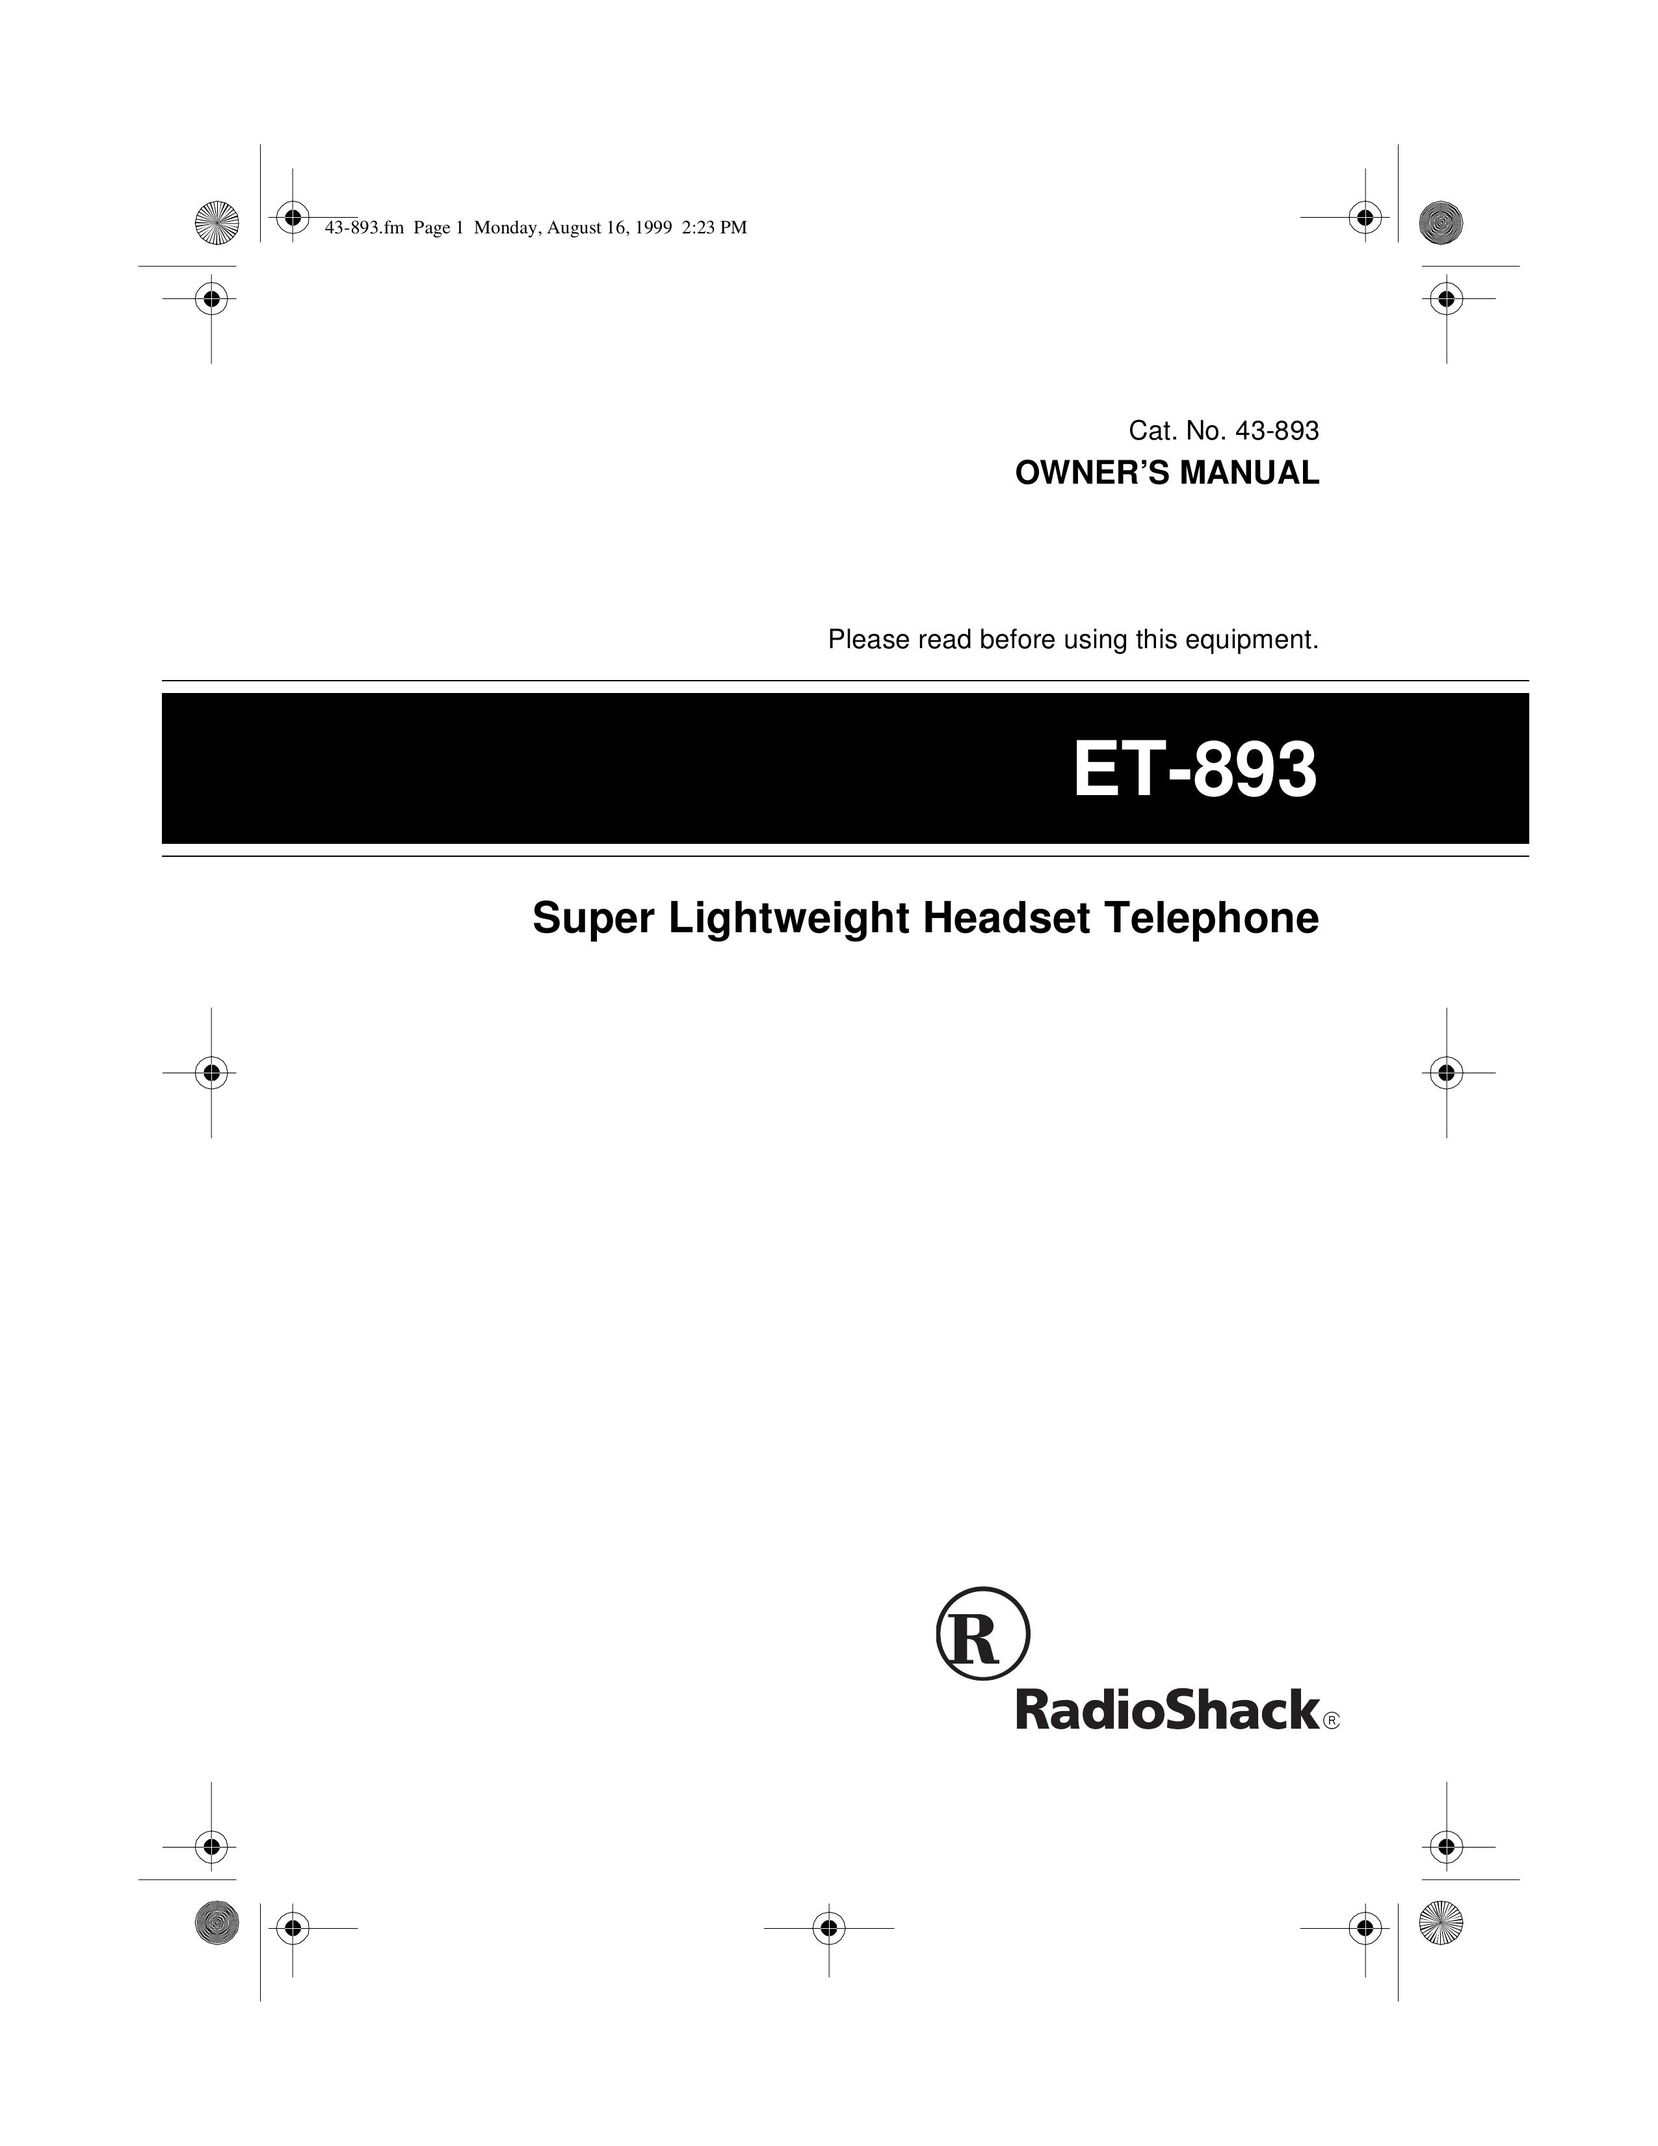 Radio Shack ET-893 Telephone User Manual